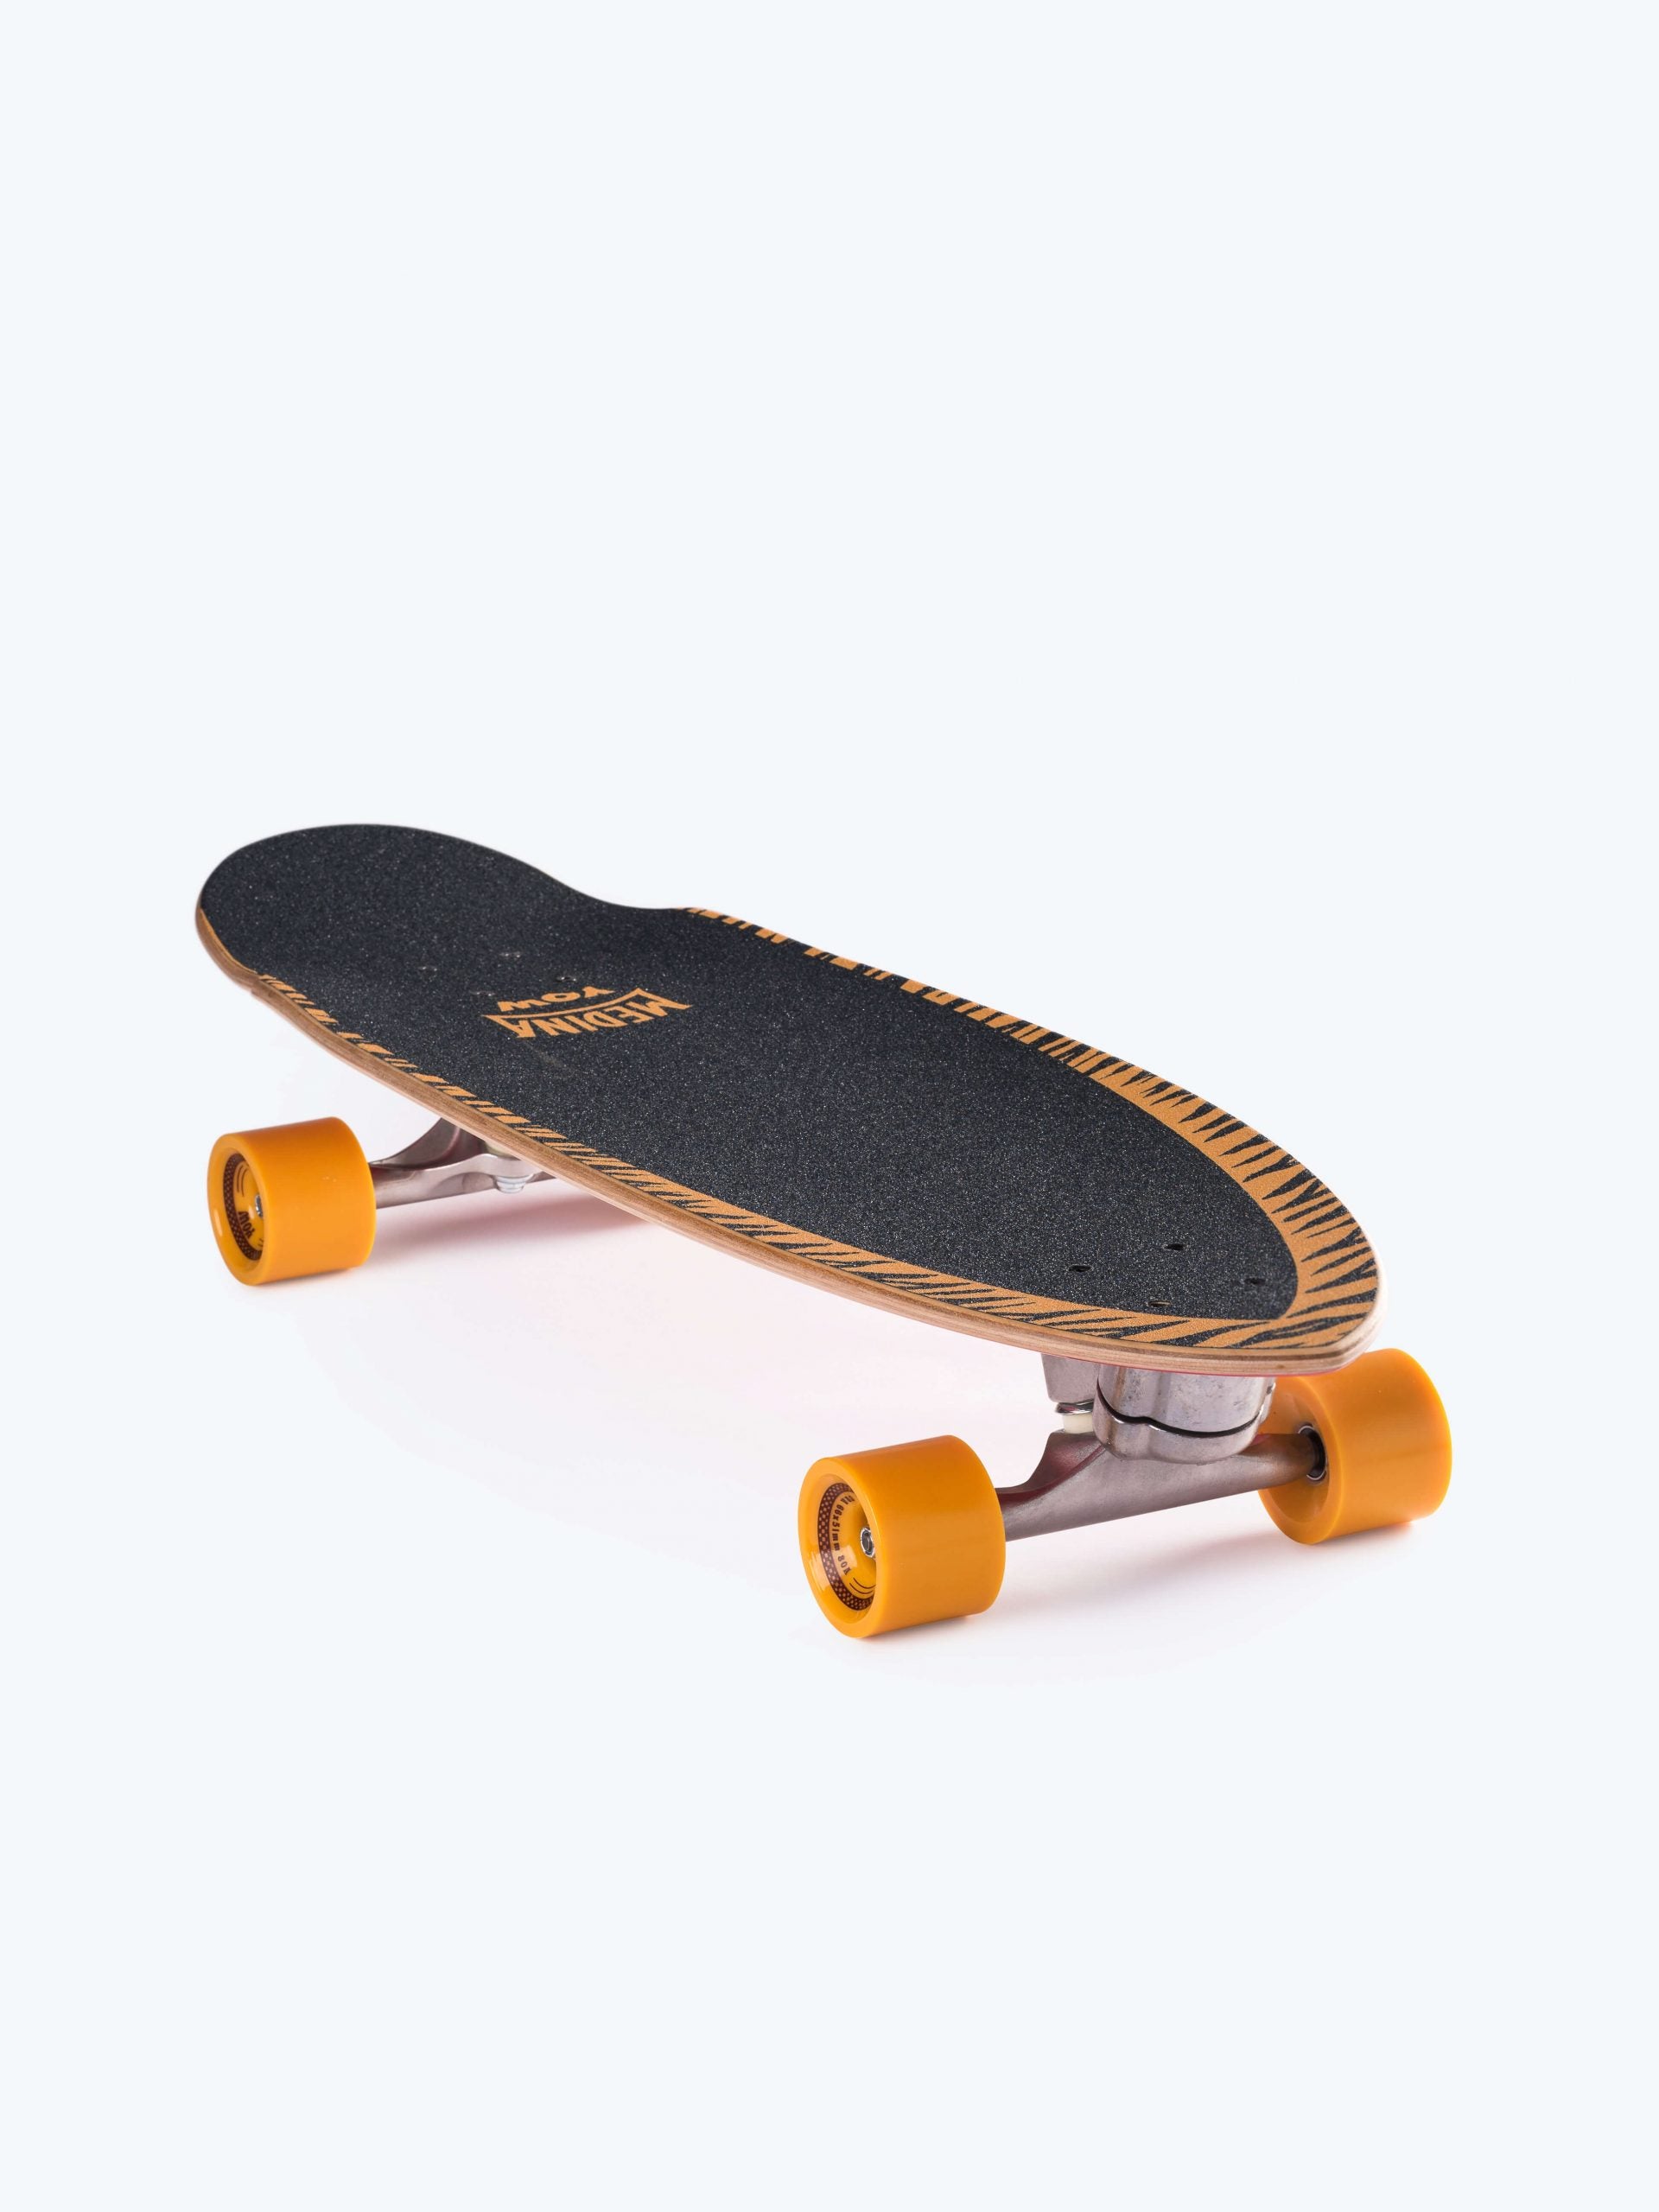 YOW X MEDINA BENGAL 33" SURFSKATE Skateboard - red Skateboard